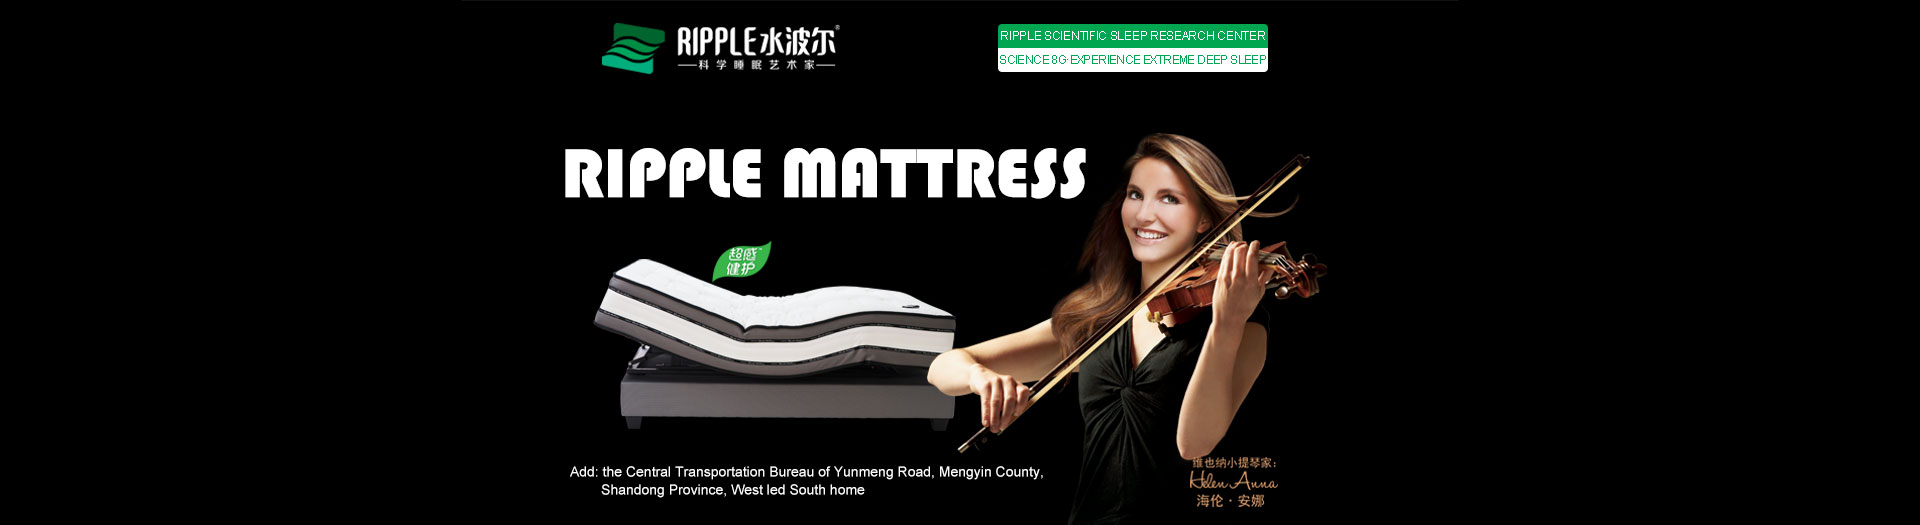 natural latex mattress,hotel mattress,intelligent mattress,which brand is good for the mattress